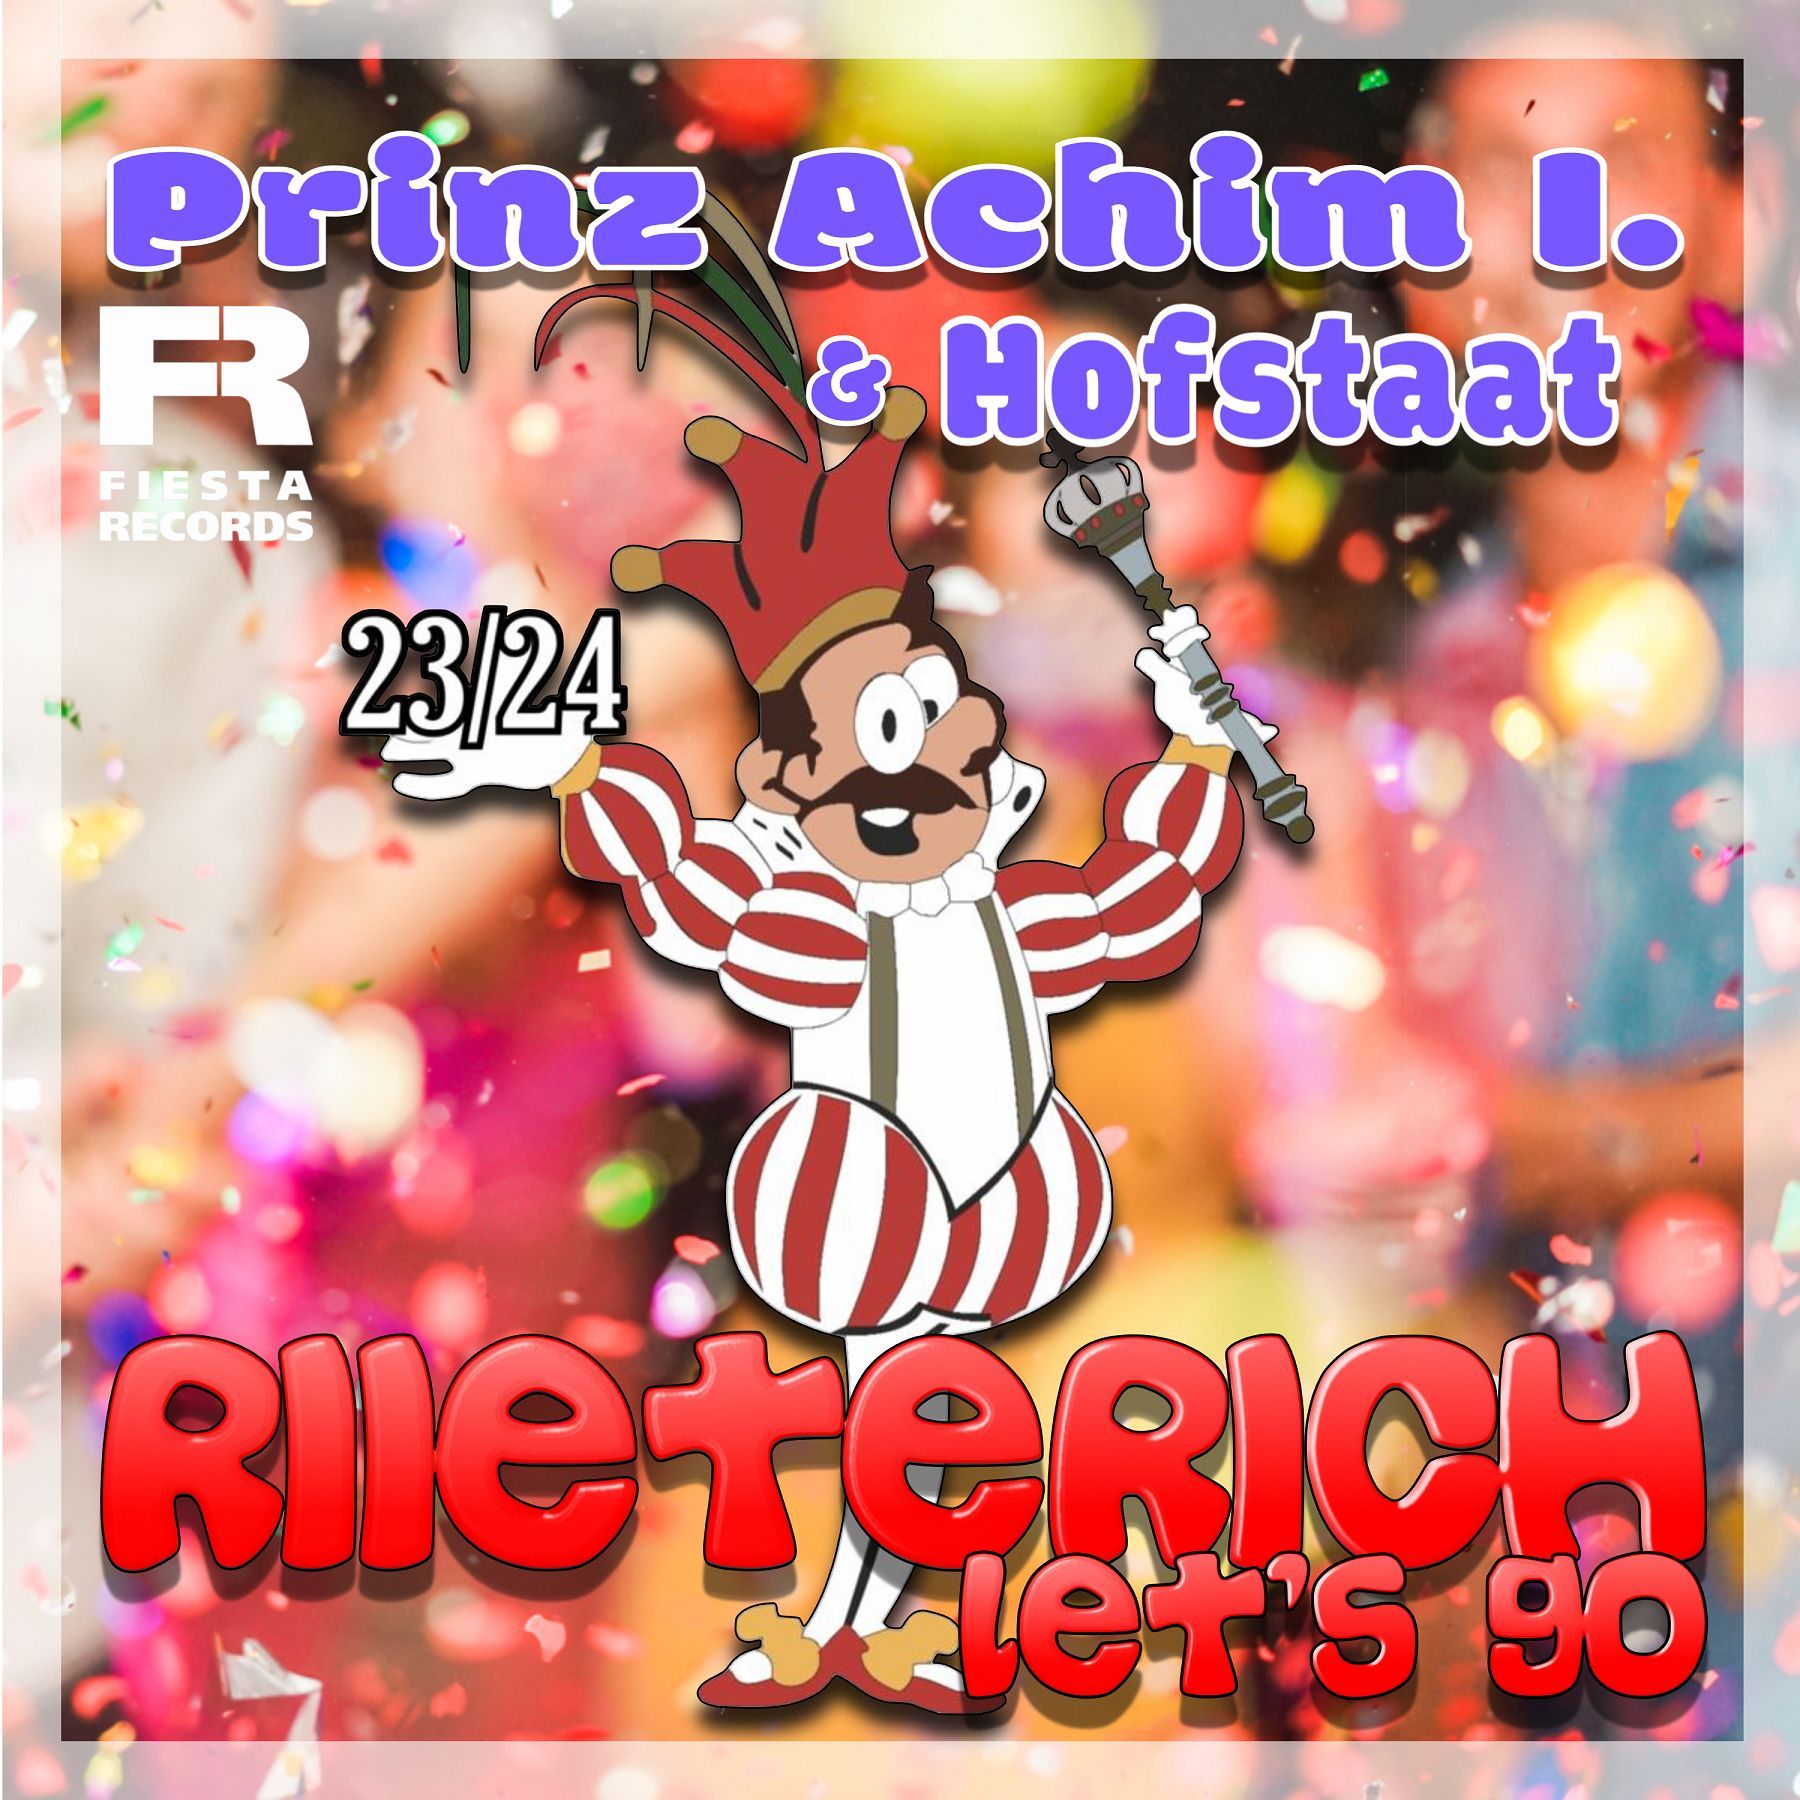 PRINZ ACHIM I. & HOFSTAAT RICHTERICH - Riieterich Let's Go